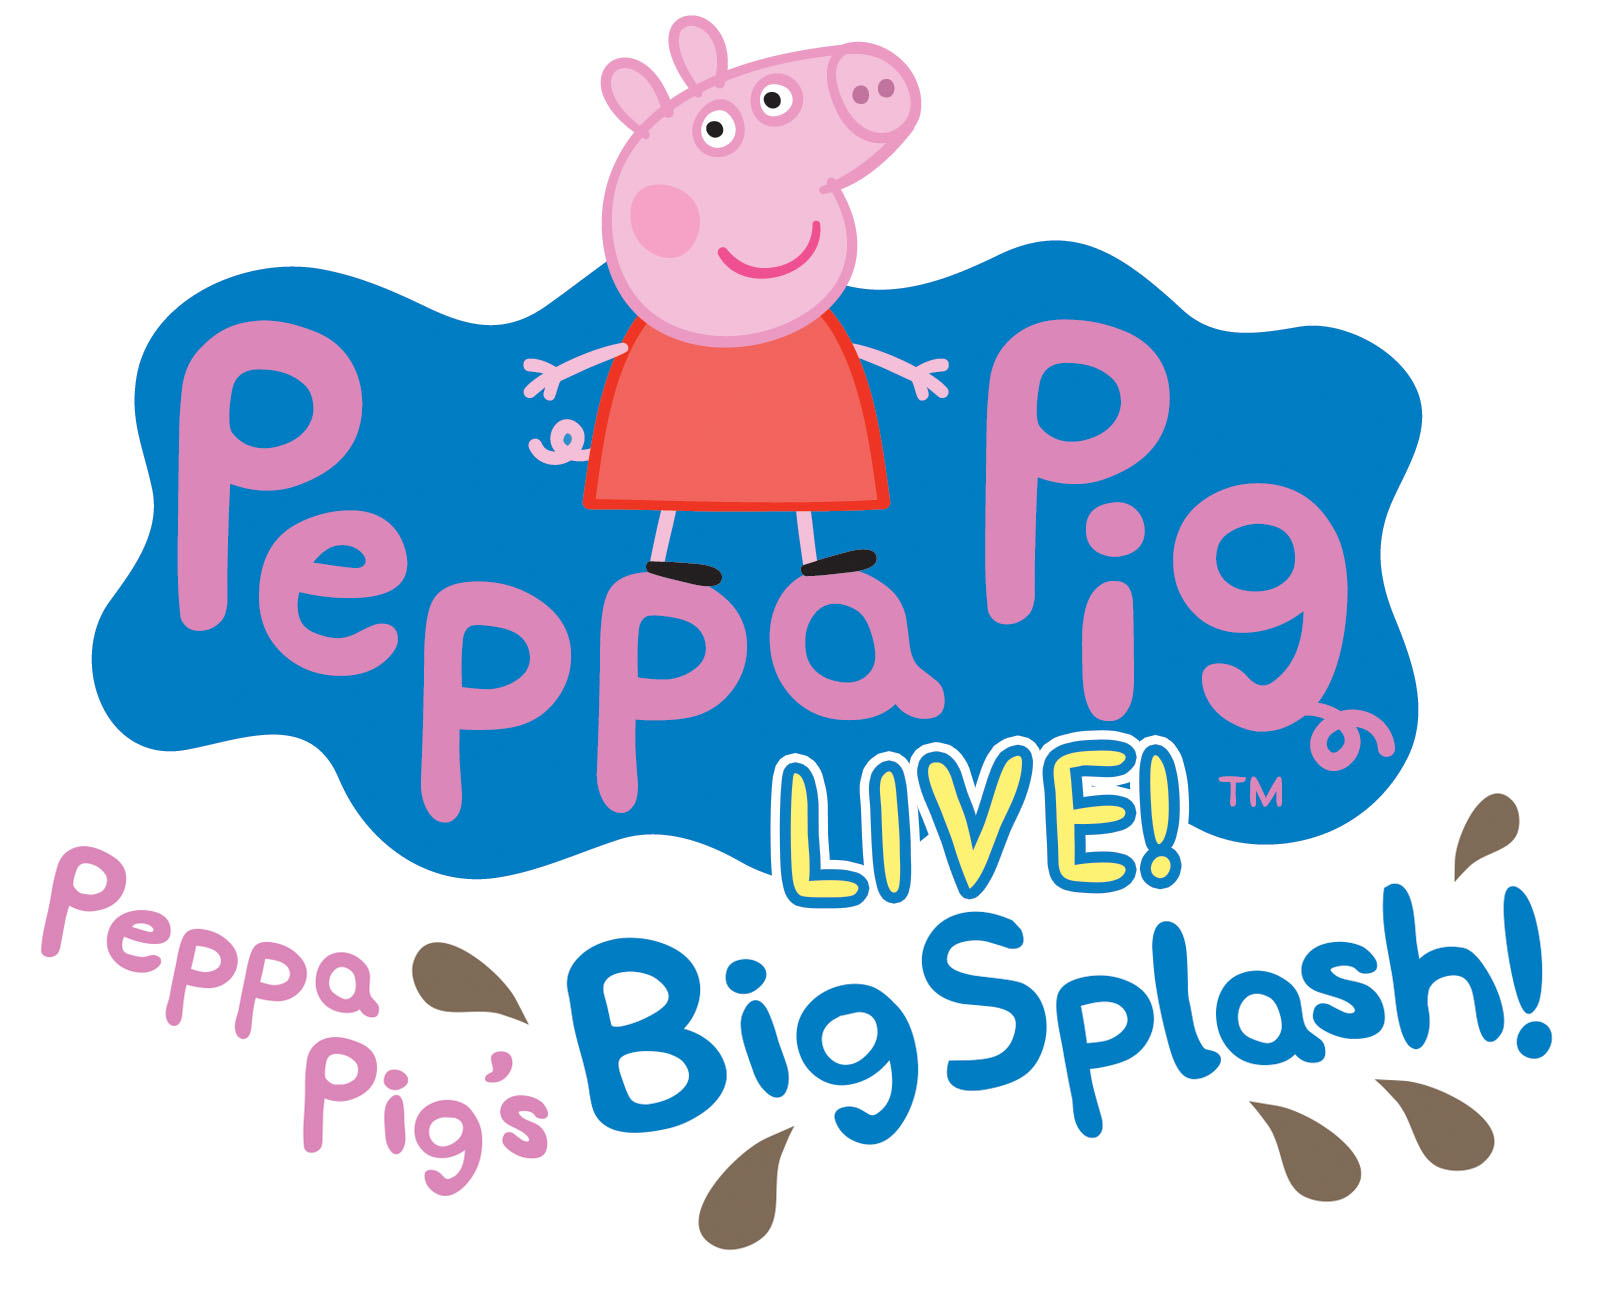 Peppa Pig’s Big Splash Coming to Ames!